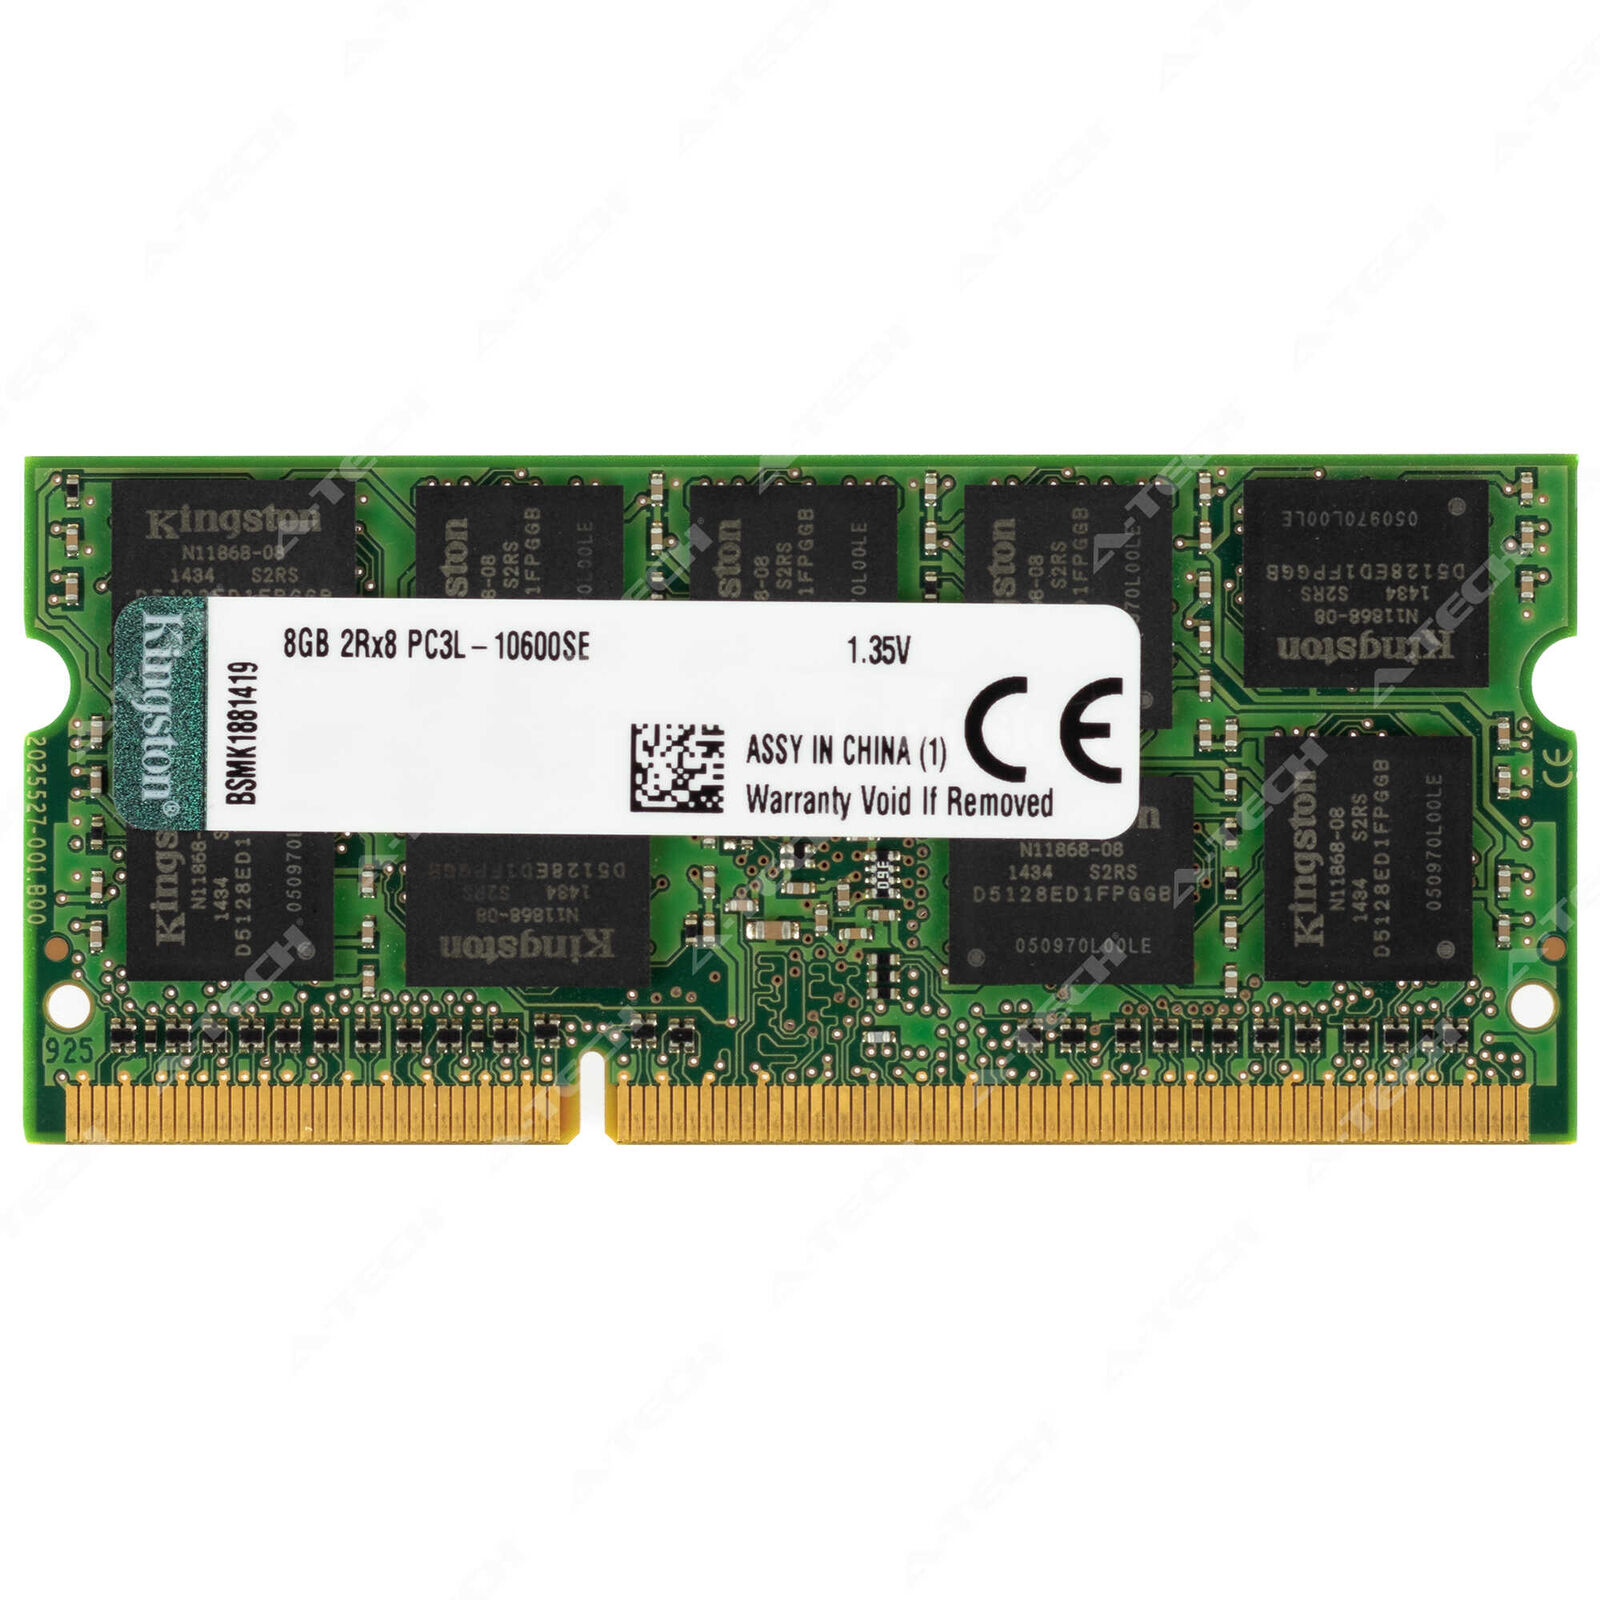 Kingston 8GB 2Rx8 EP3L-10600E ECC SODIMM DDR3L 1333 Unbuffered Server Memory RAM